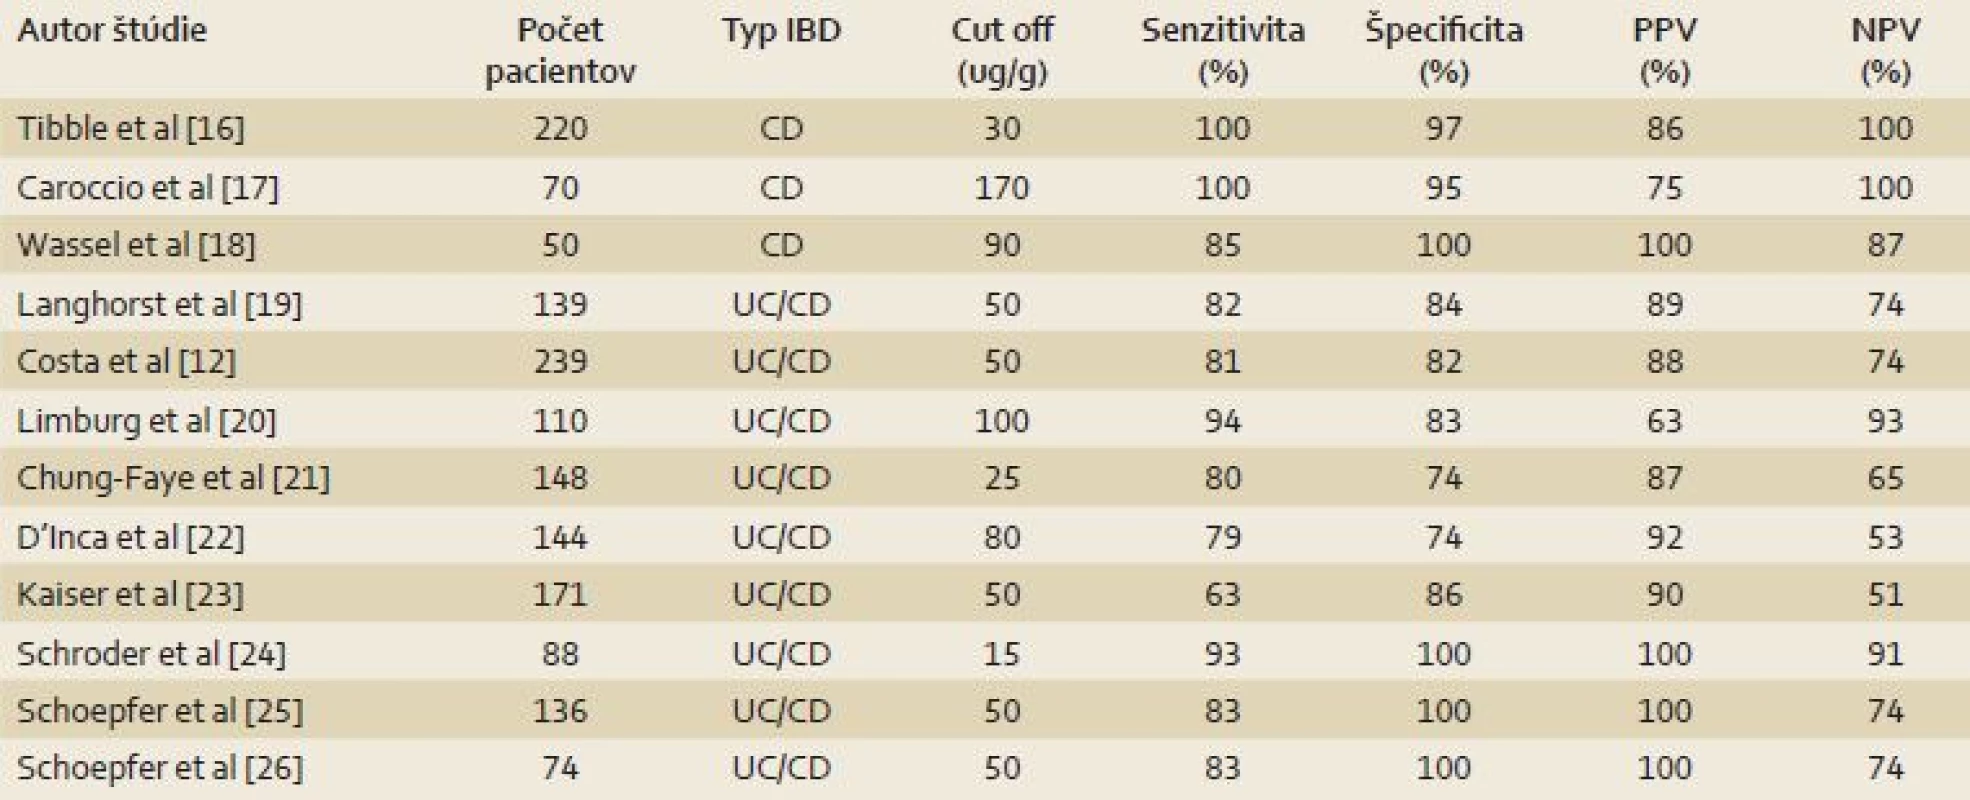 Význam fekálneho kalprotektínu v diagnostike IBD.
Tab. 1. The importance of fecal calprotectin in the diagnostics of IBD.